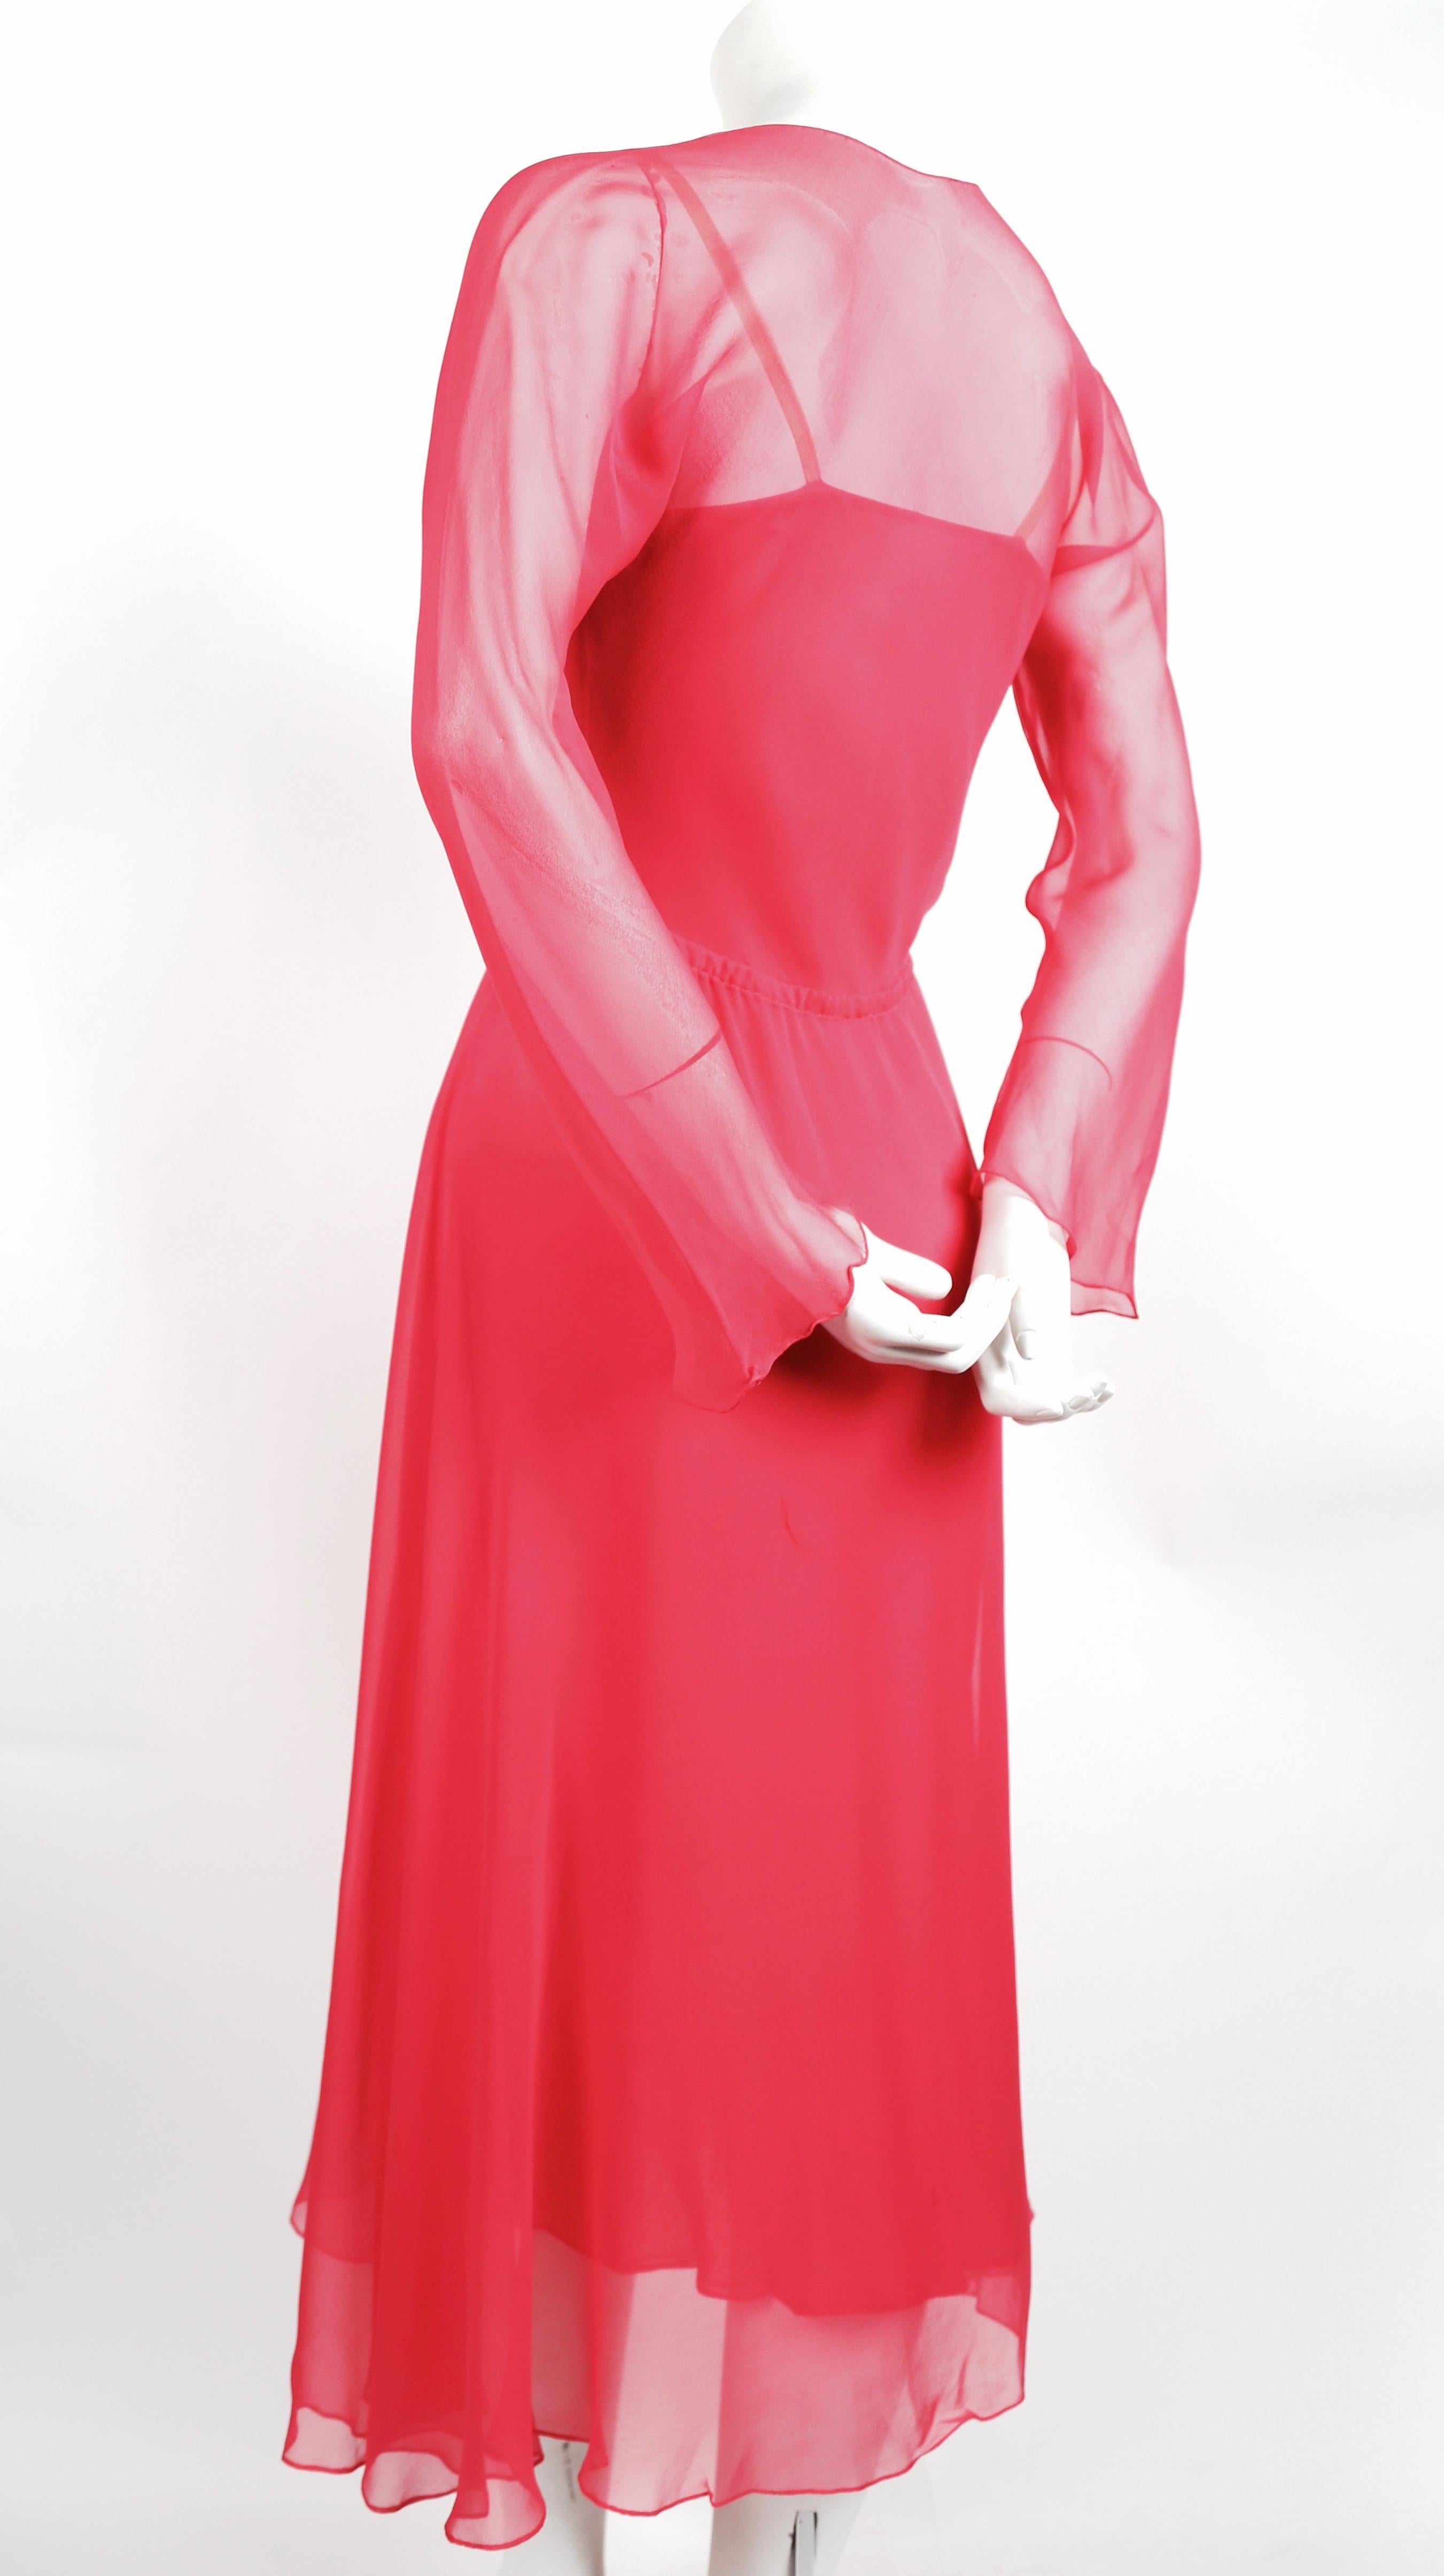 Red 1970's HALSTON fuchsia silk mousseline bias cut dress with overlay